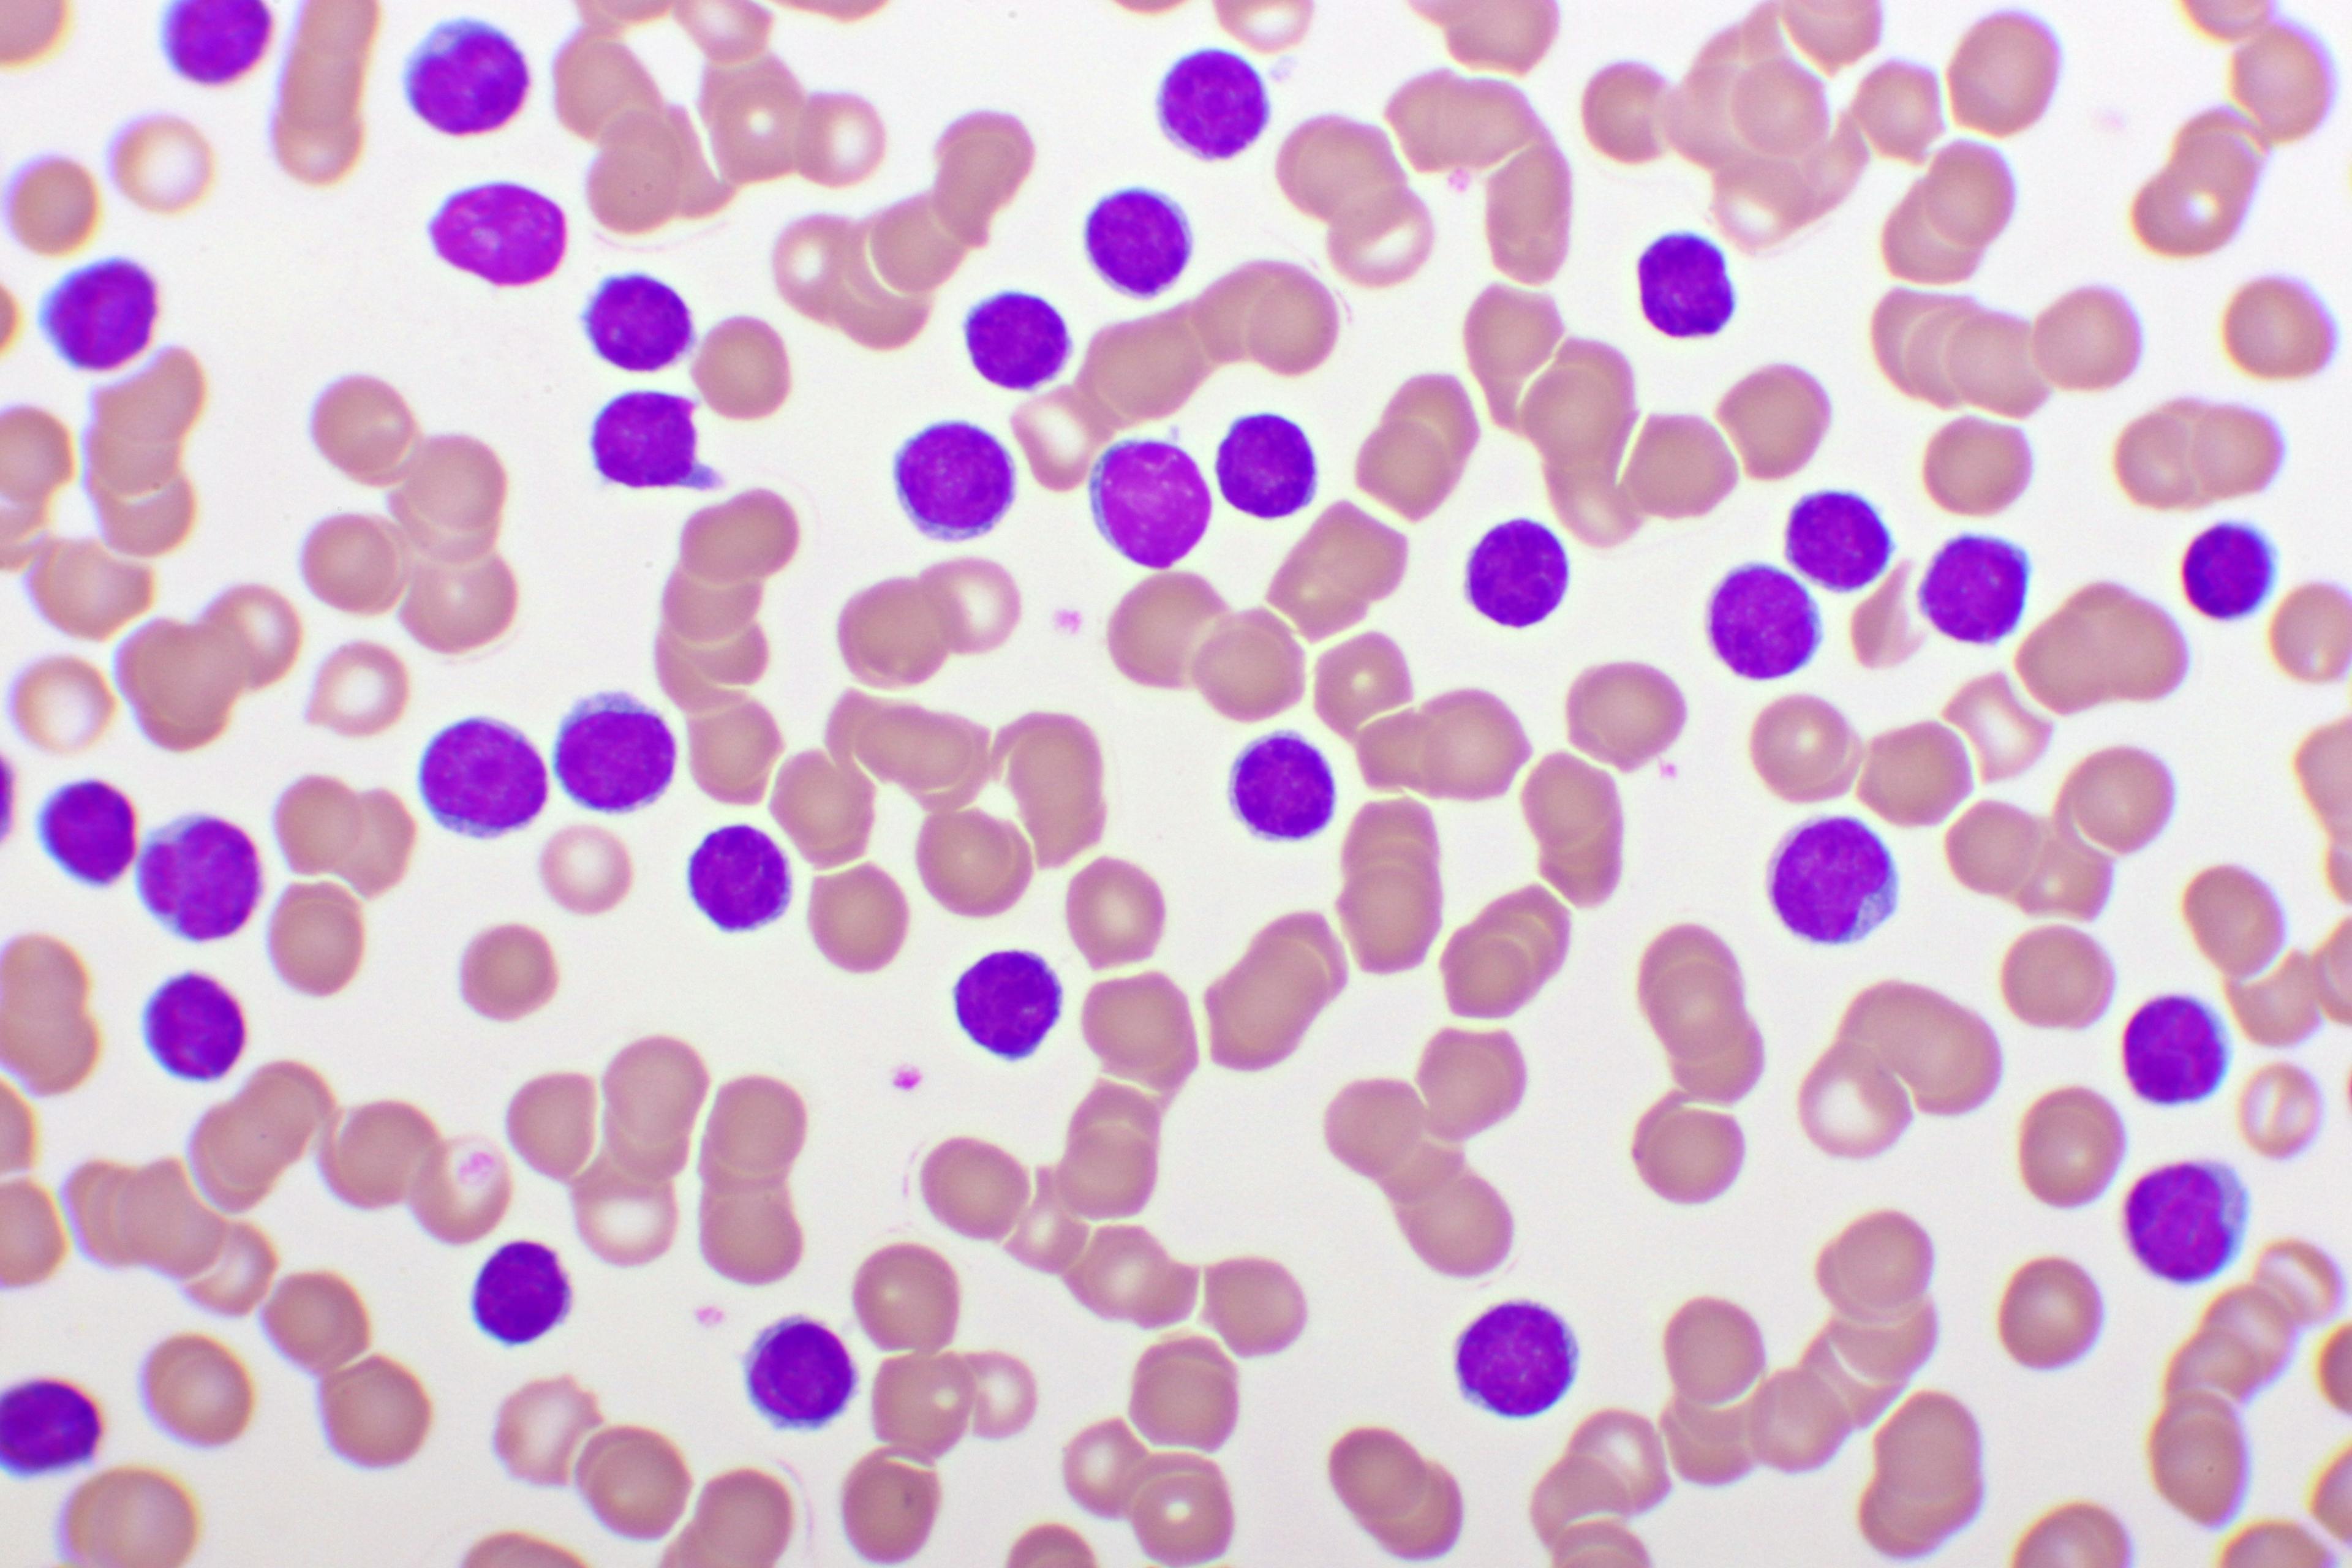 Microscopic blood picture of CLL -- Image credit: jarun011 | stock.adobe.com